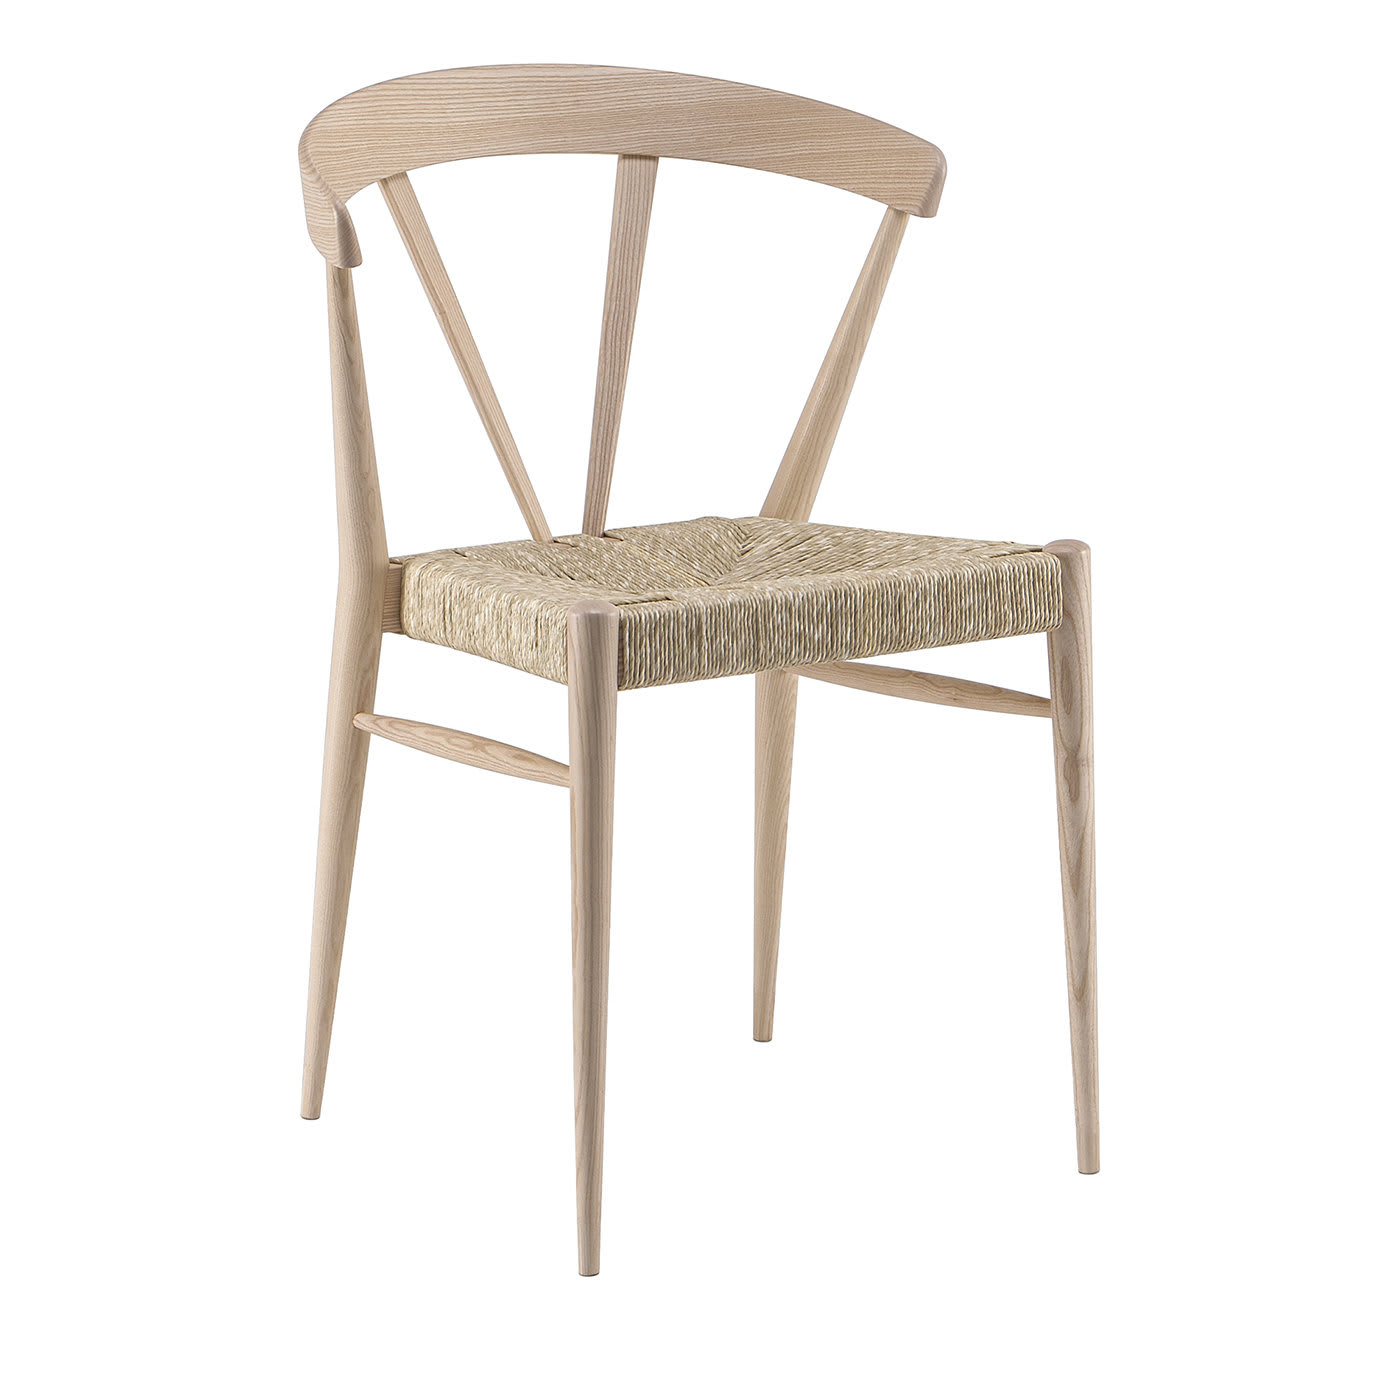 Ginger Beige Chair by Studio Balutto Associati - Cizeta